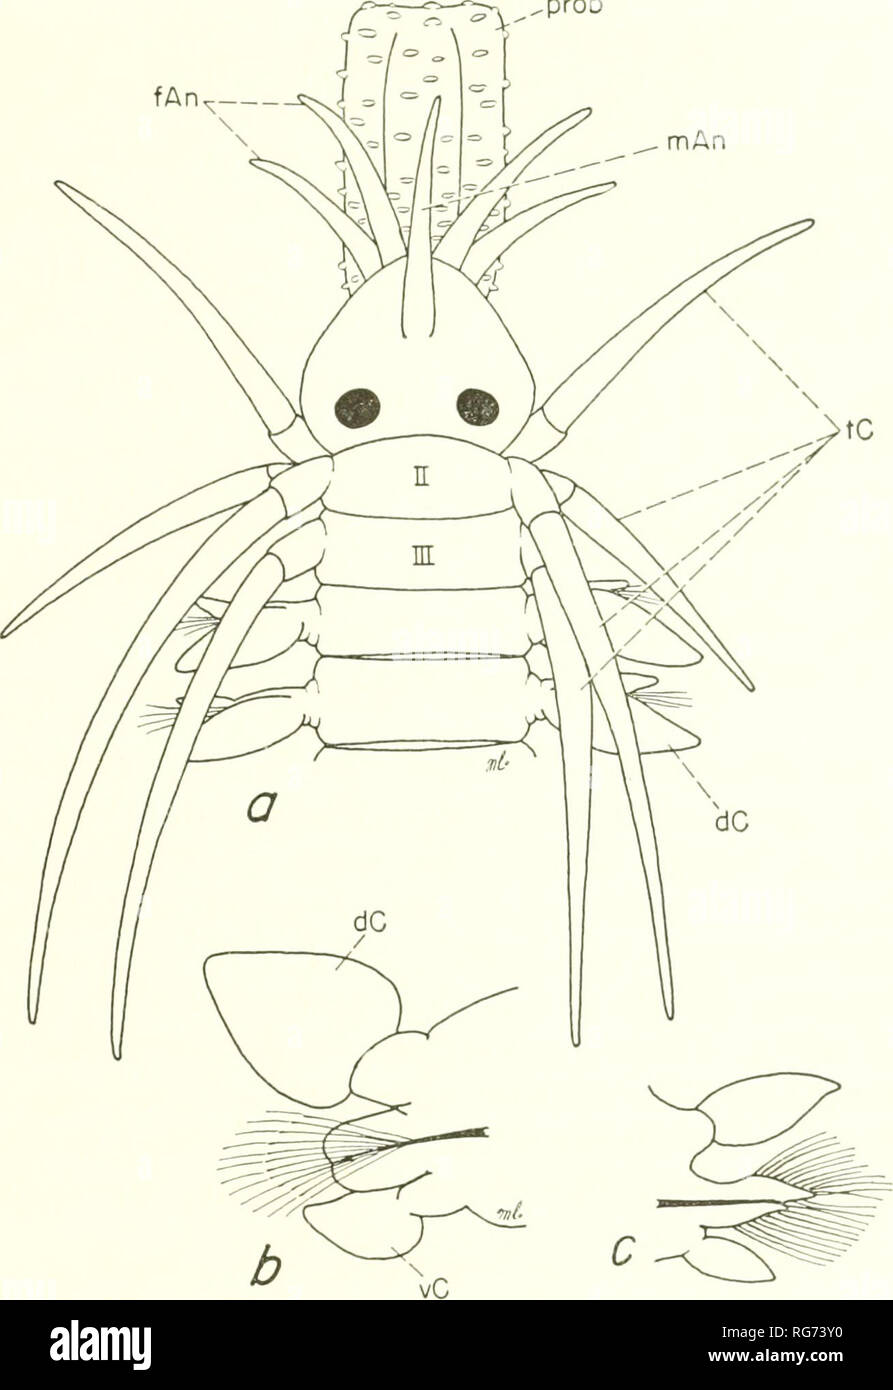 . Bulletin - United States National Museum. Science. POLYCHAETE WORMS, PART 1 89 prob. Figure 21.—Phyllodocidae, a-b, Eumida sanguinea: a, dorsal view anterior end, proboscis partially extended; h, parapodium. c, Eumida fusigera, parapodium (after Malmgren, 1865). 1946, p. 56, fig. 24.—Berkeley and Berkeley, 1948, p. 47, fig. 69.—Wesenberg- Lund, 1949, p. 273.—Day, 1953, p. 411; 1960, p. 301.—Uschakov, 1955, p. 98, fig. 6.—Uschakov and Wii, 1959, p. 25.—Clark, 1960, p. 16.—Knox, 1960a, p. 113. Eumida sanguinea Hartman, 1942b, p. 36; 1942c, p. 112, fig. 8,f-g; 1944a, p. 338, pi. 23, fig. 10; 19 Stock Photo